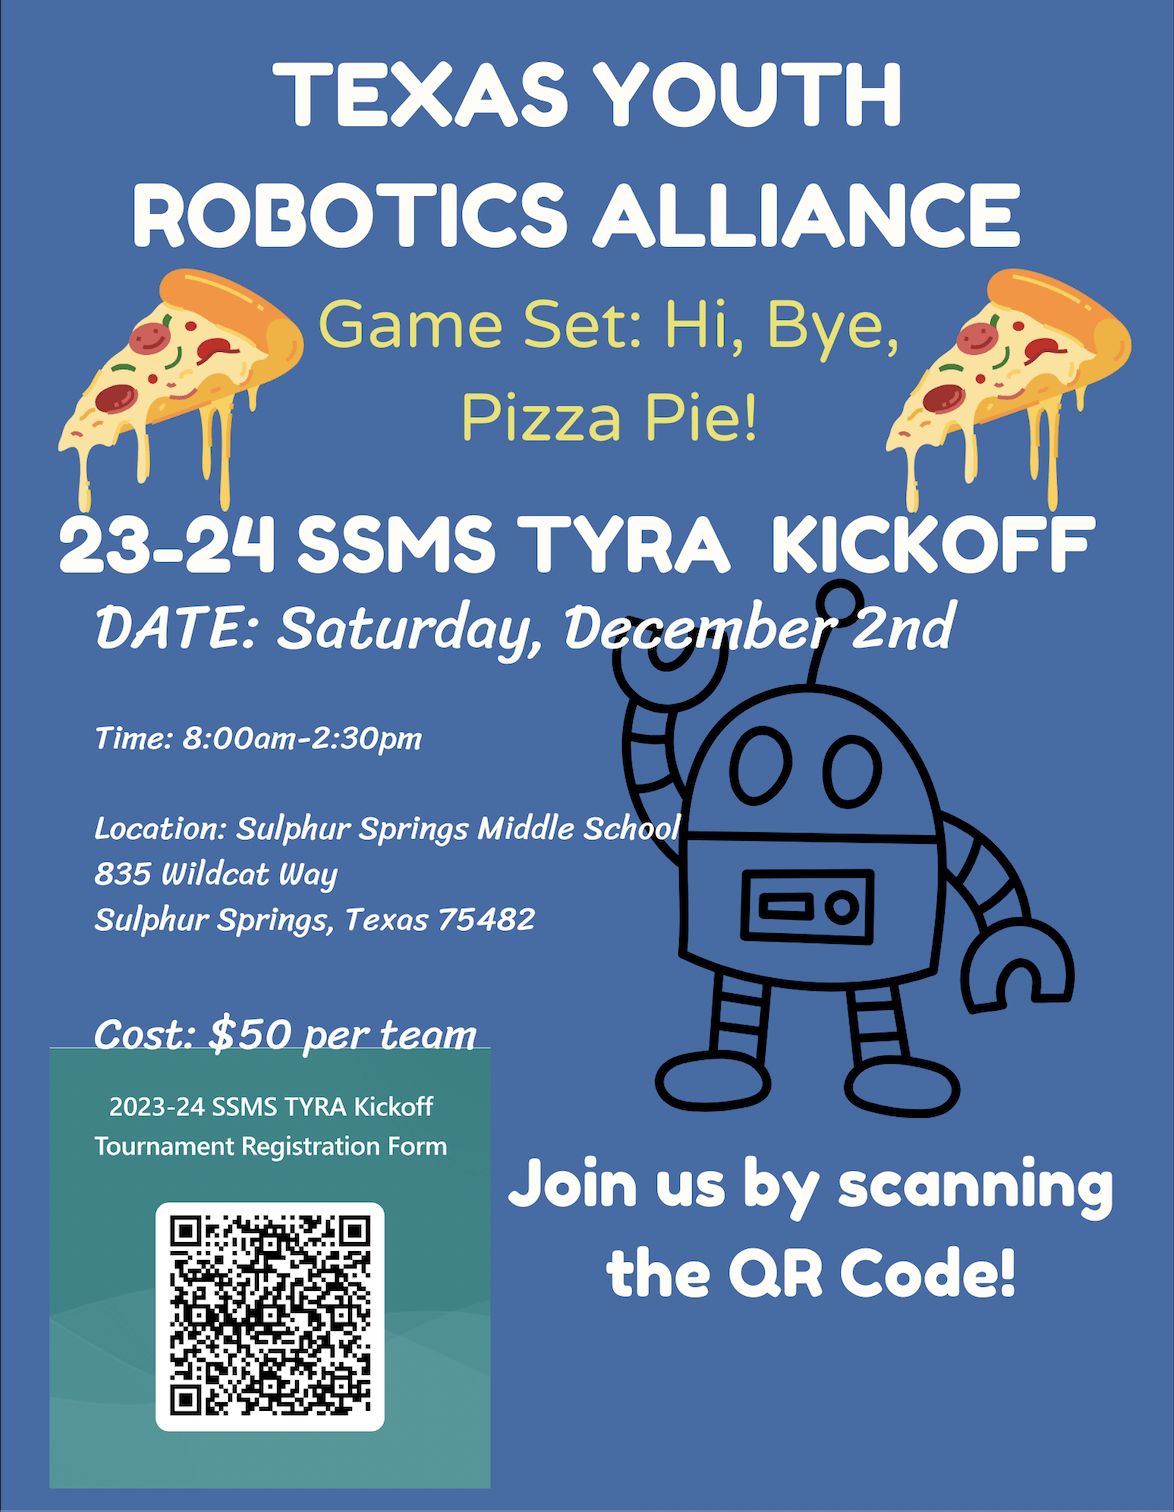 TYRA Robotics Tournament Kickoff Saturday December 2nd